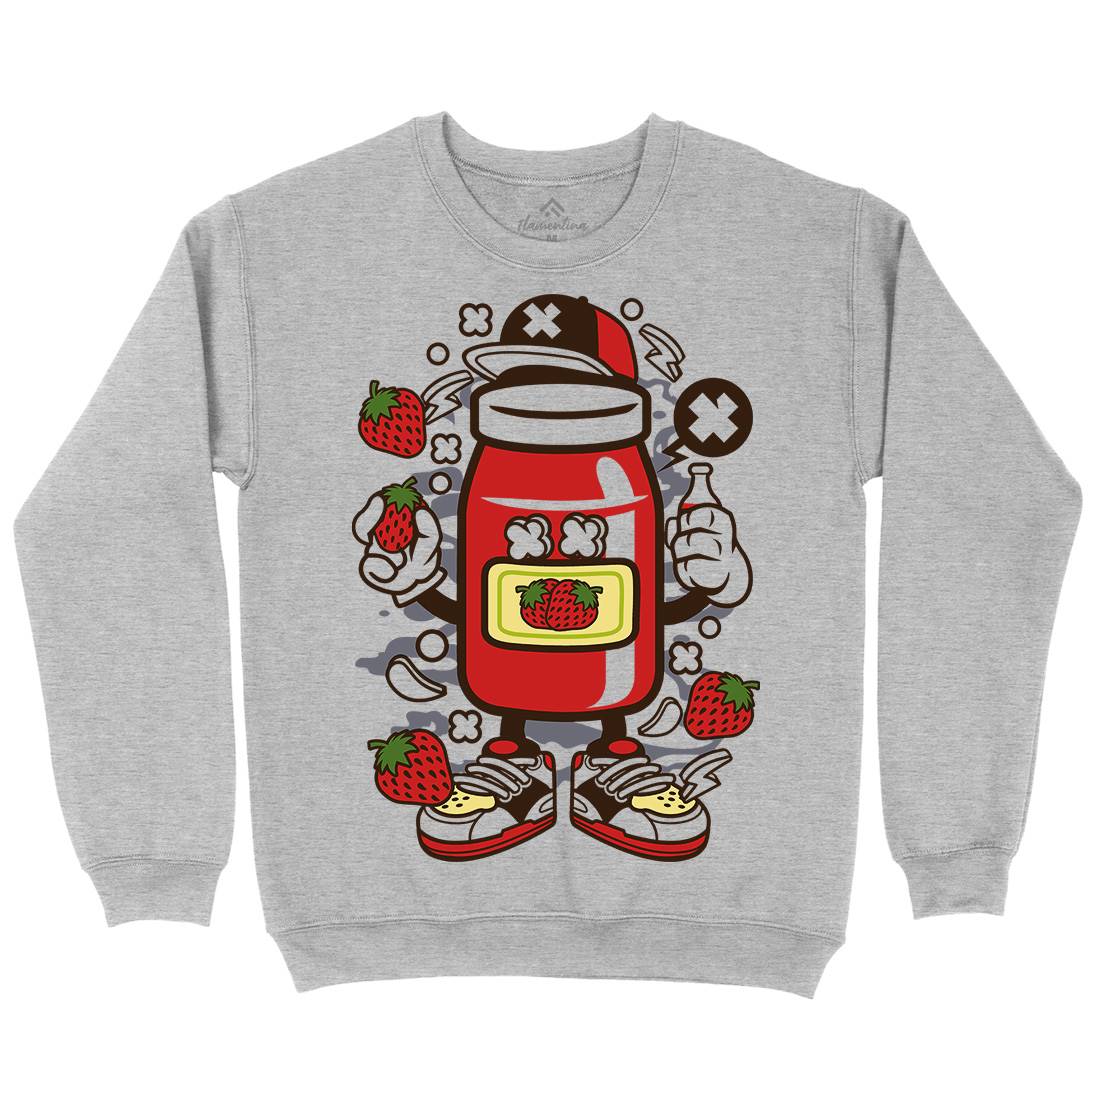 Strawberry Jam Kids Crew Neck Sweatshirt Food C261